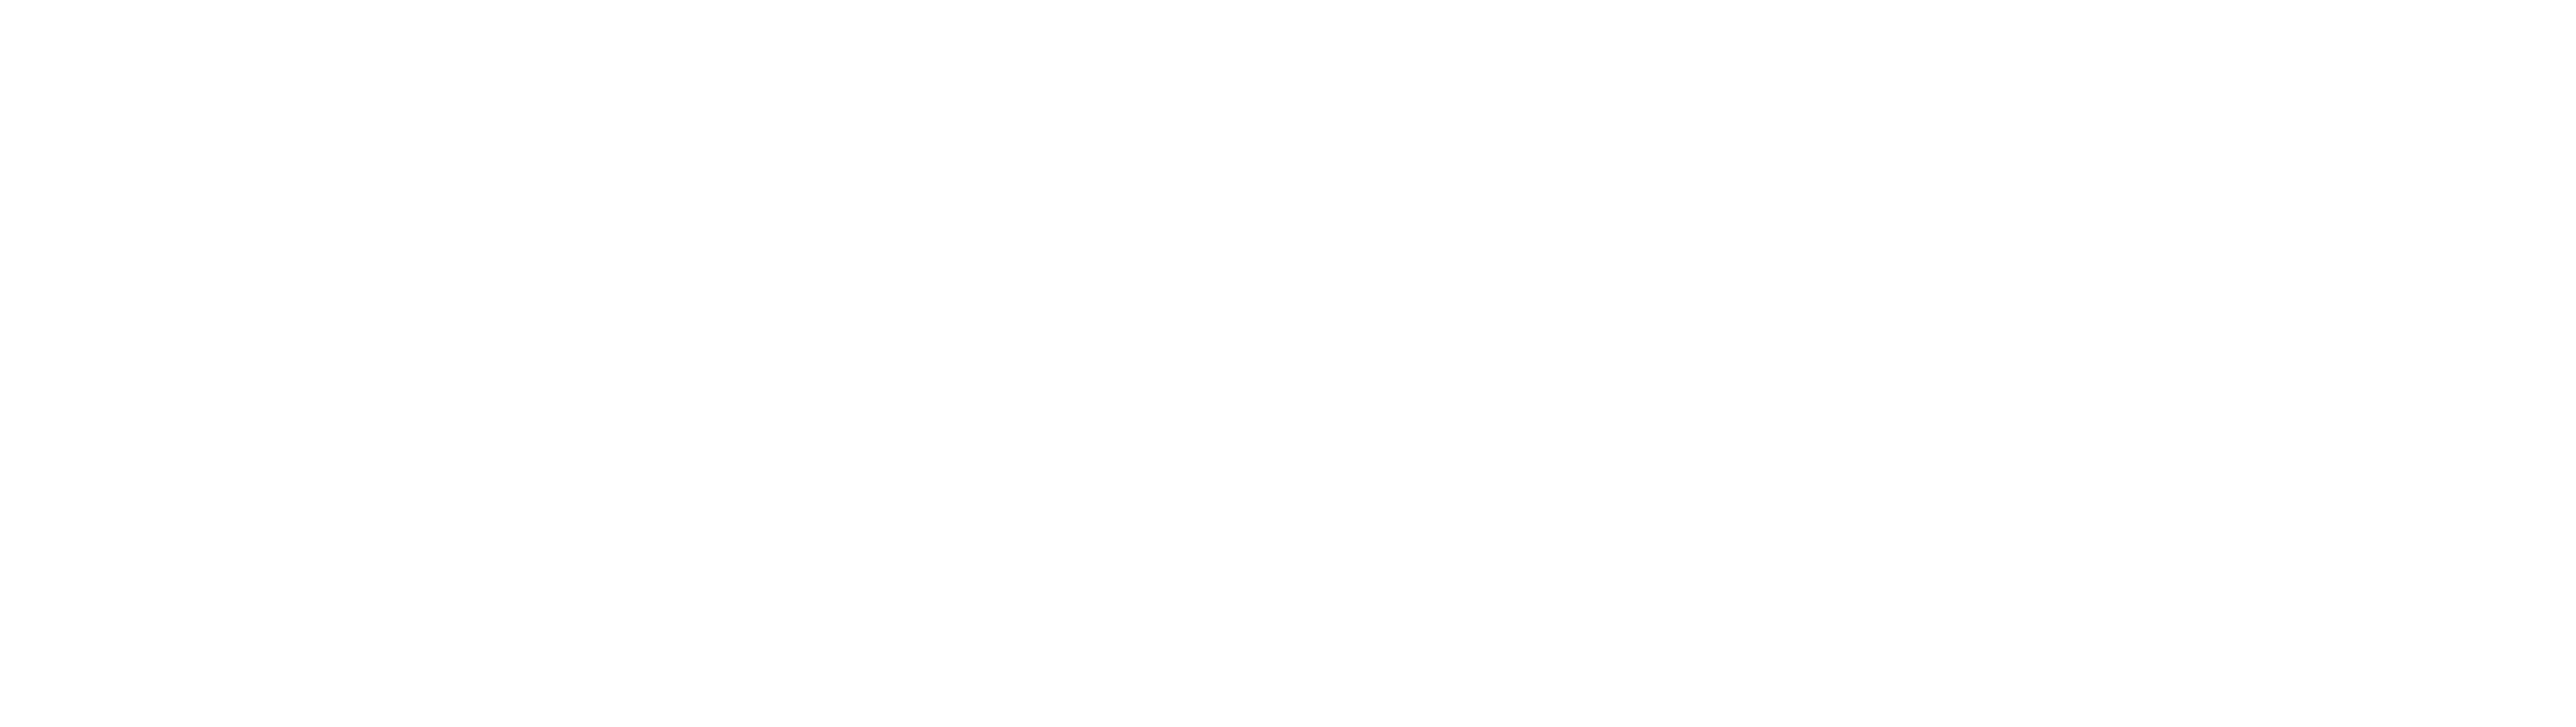 The University Of New Mexico Art Museum logo